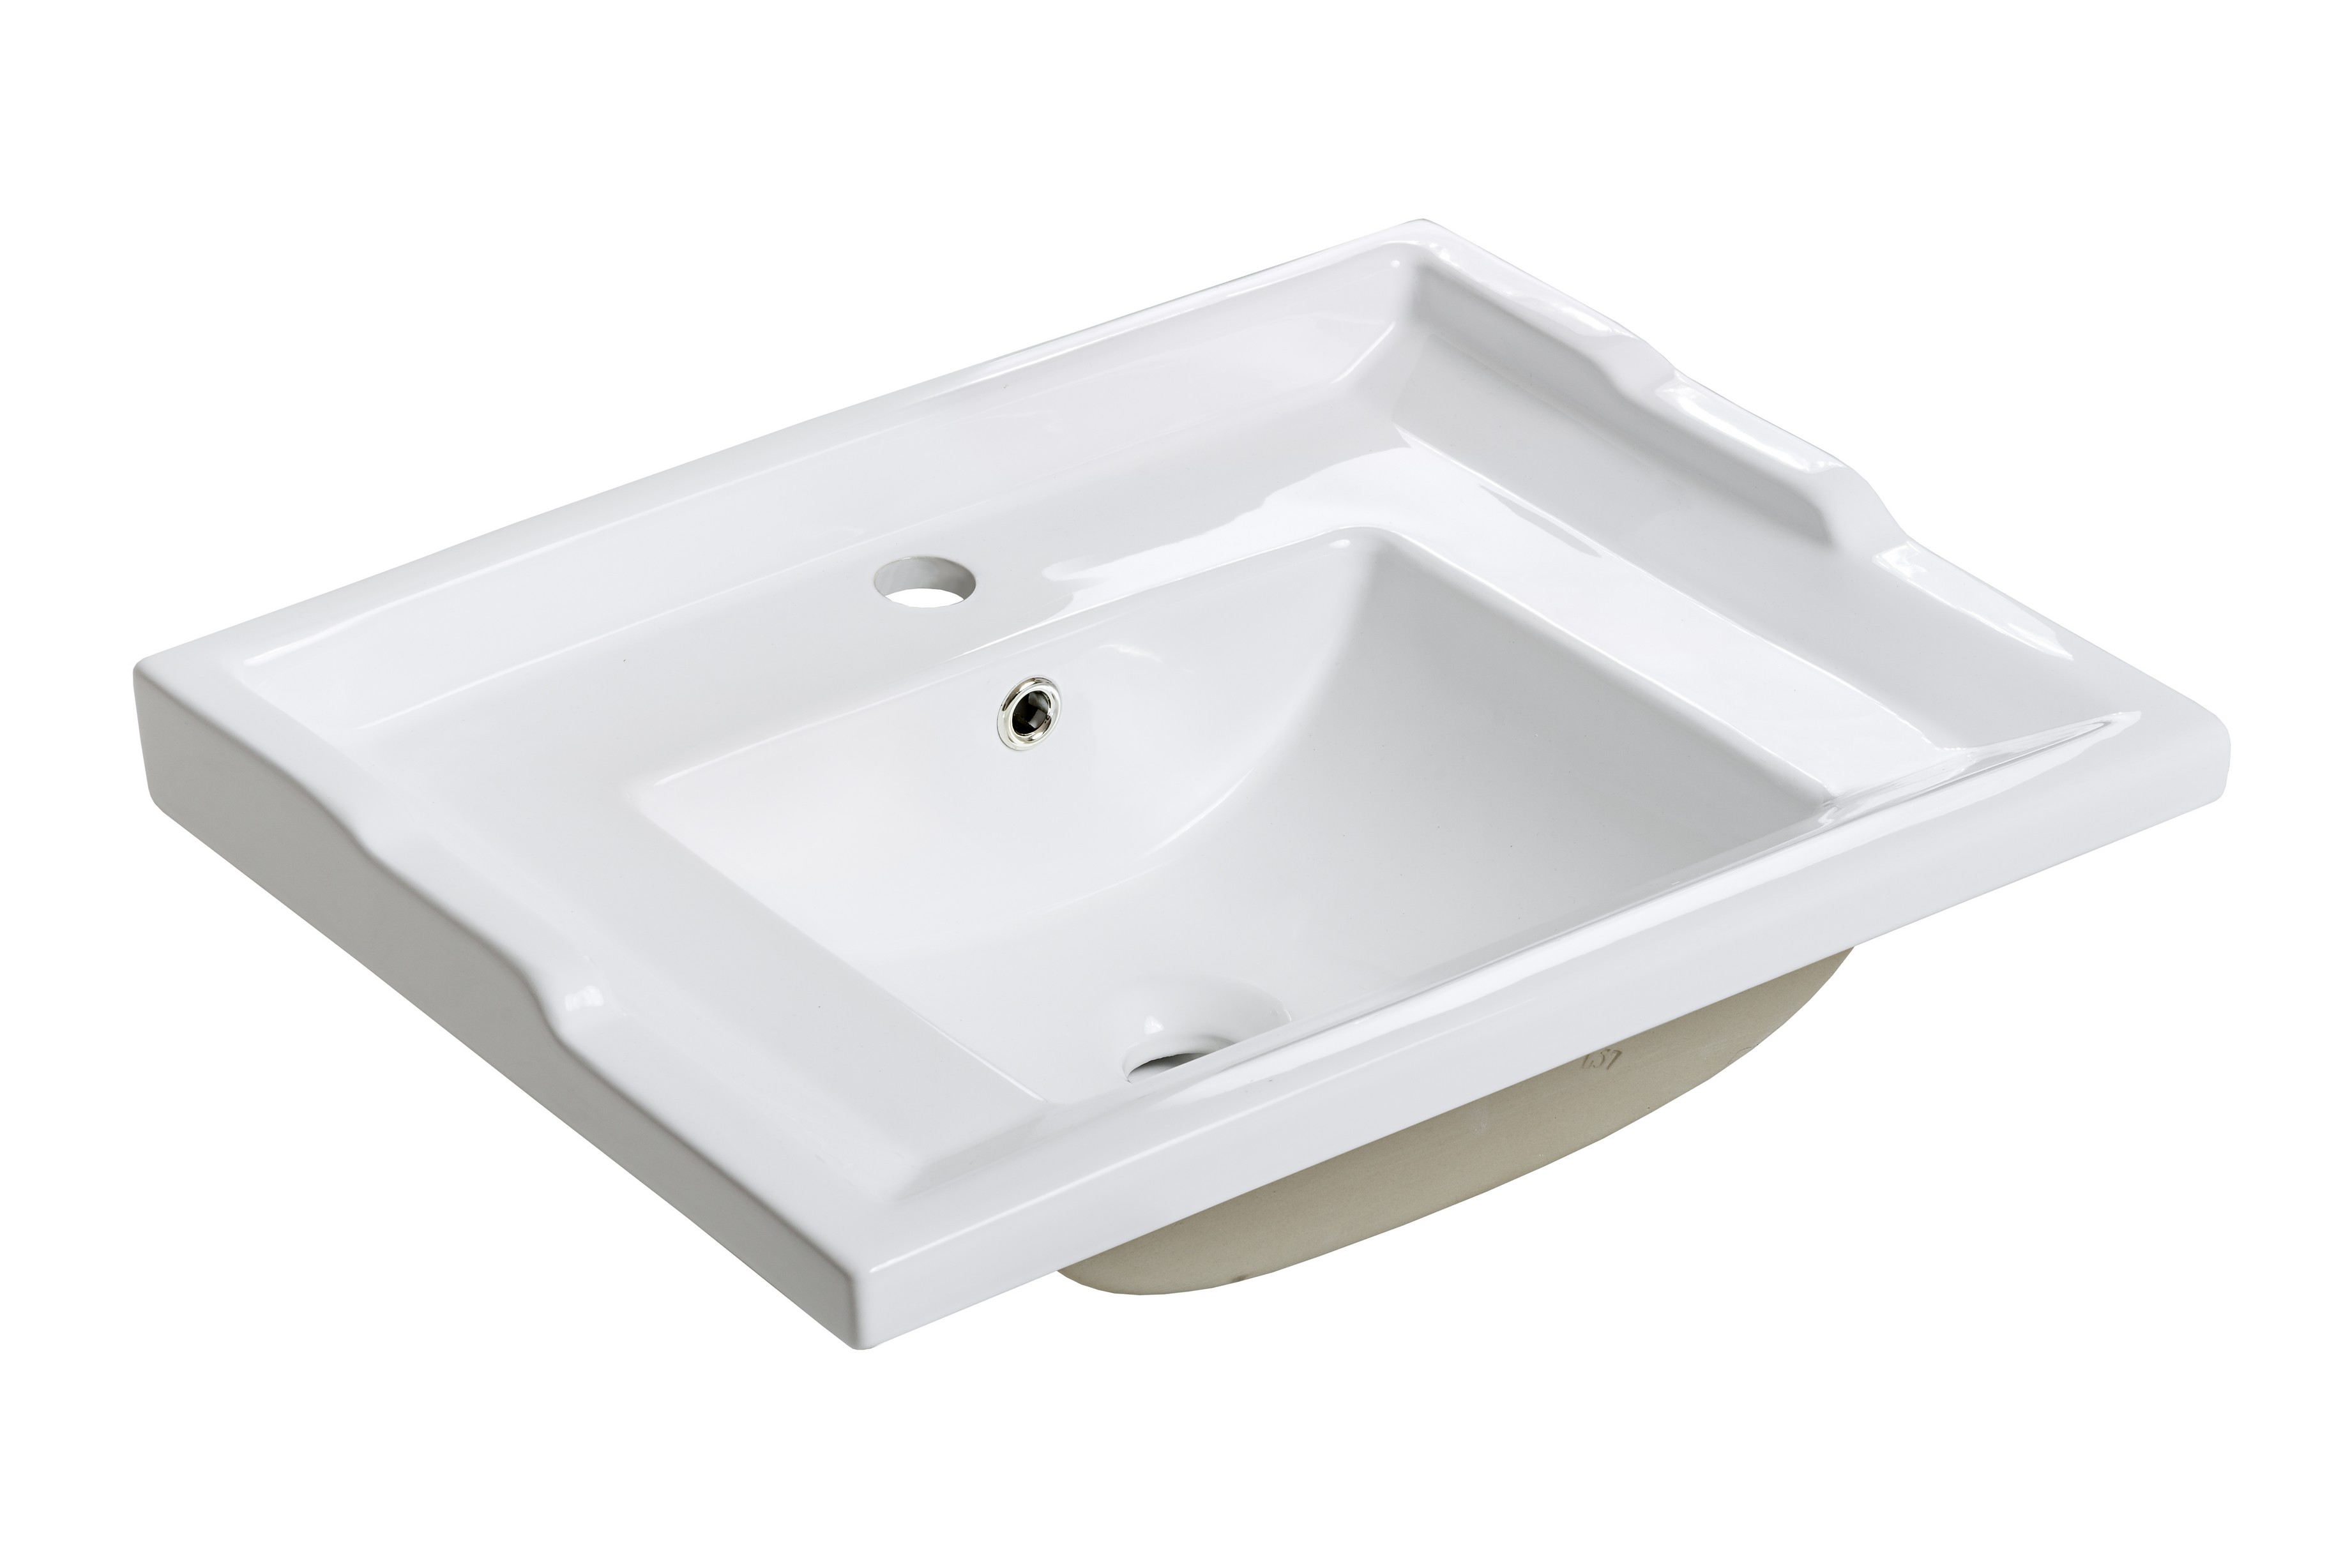 CFP - F60- RETRO- DP- umywalka ceramiczna 60cm / washbasine 60cm double pack